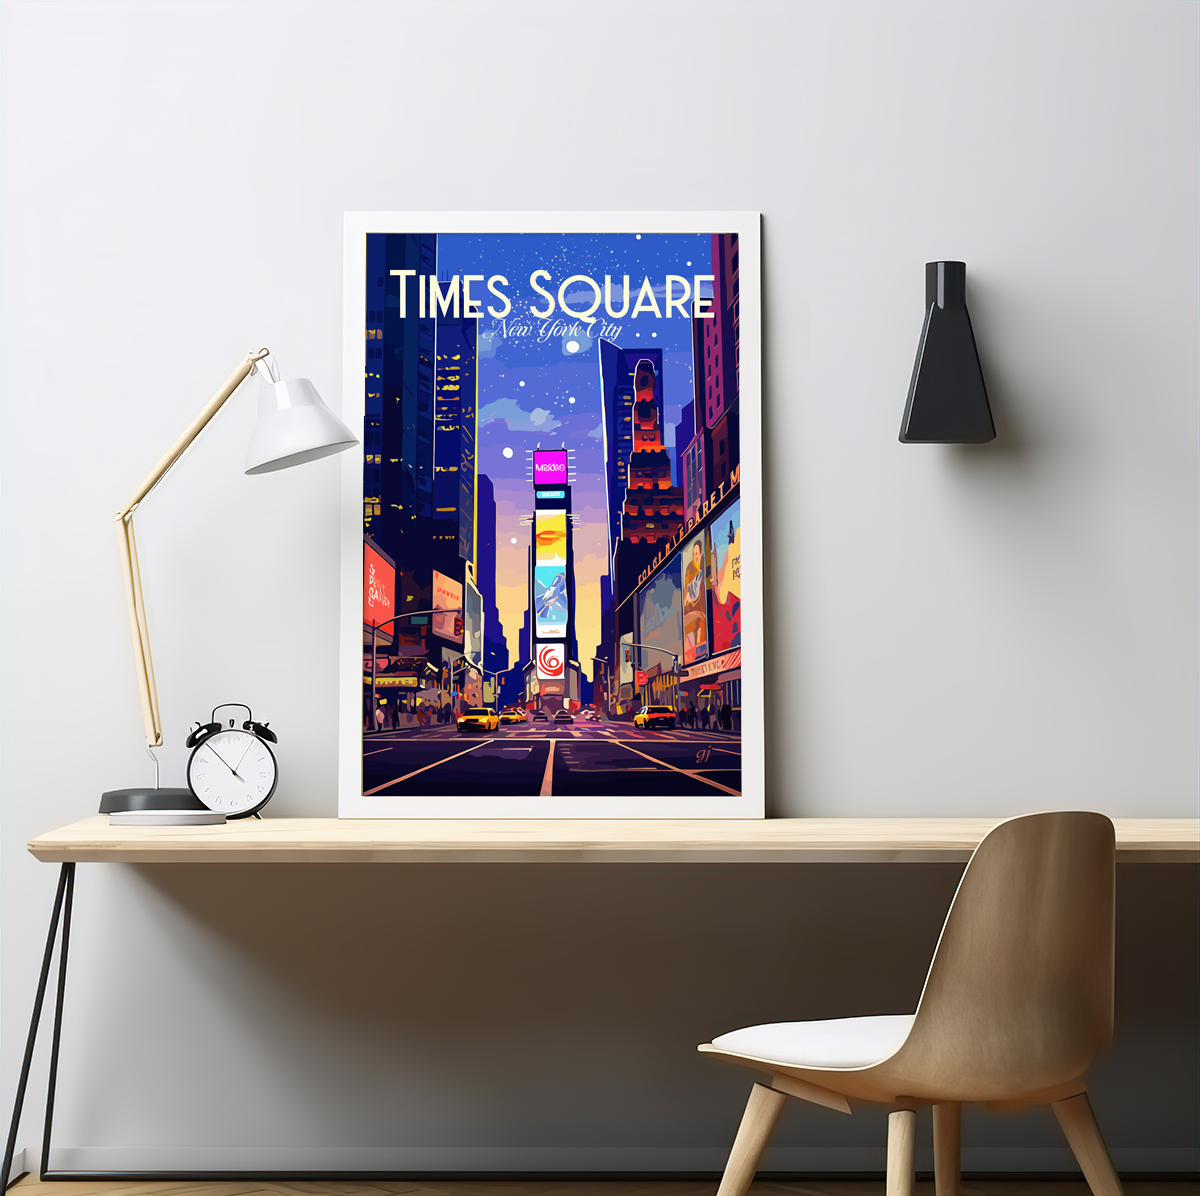 New York - Times Square poster by bon voyage design